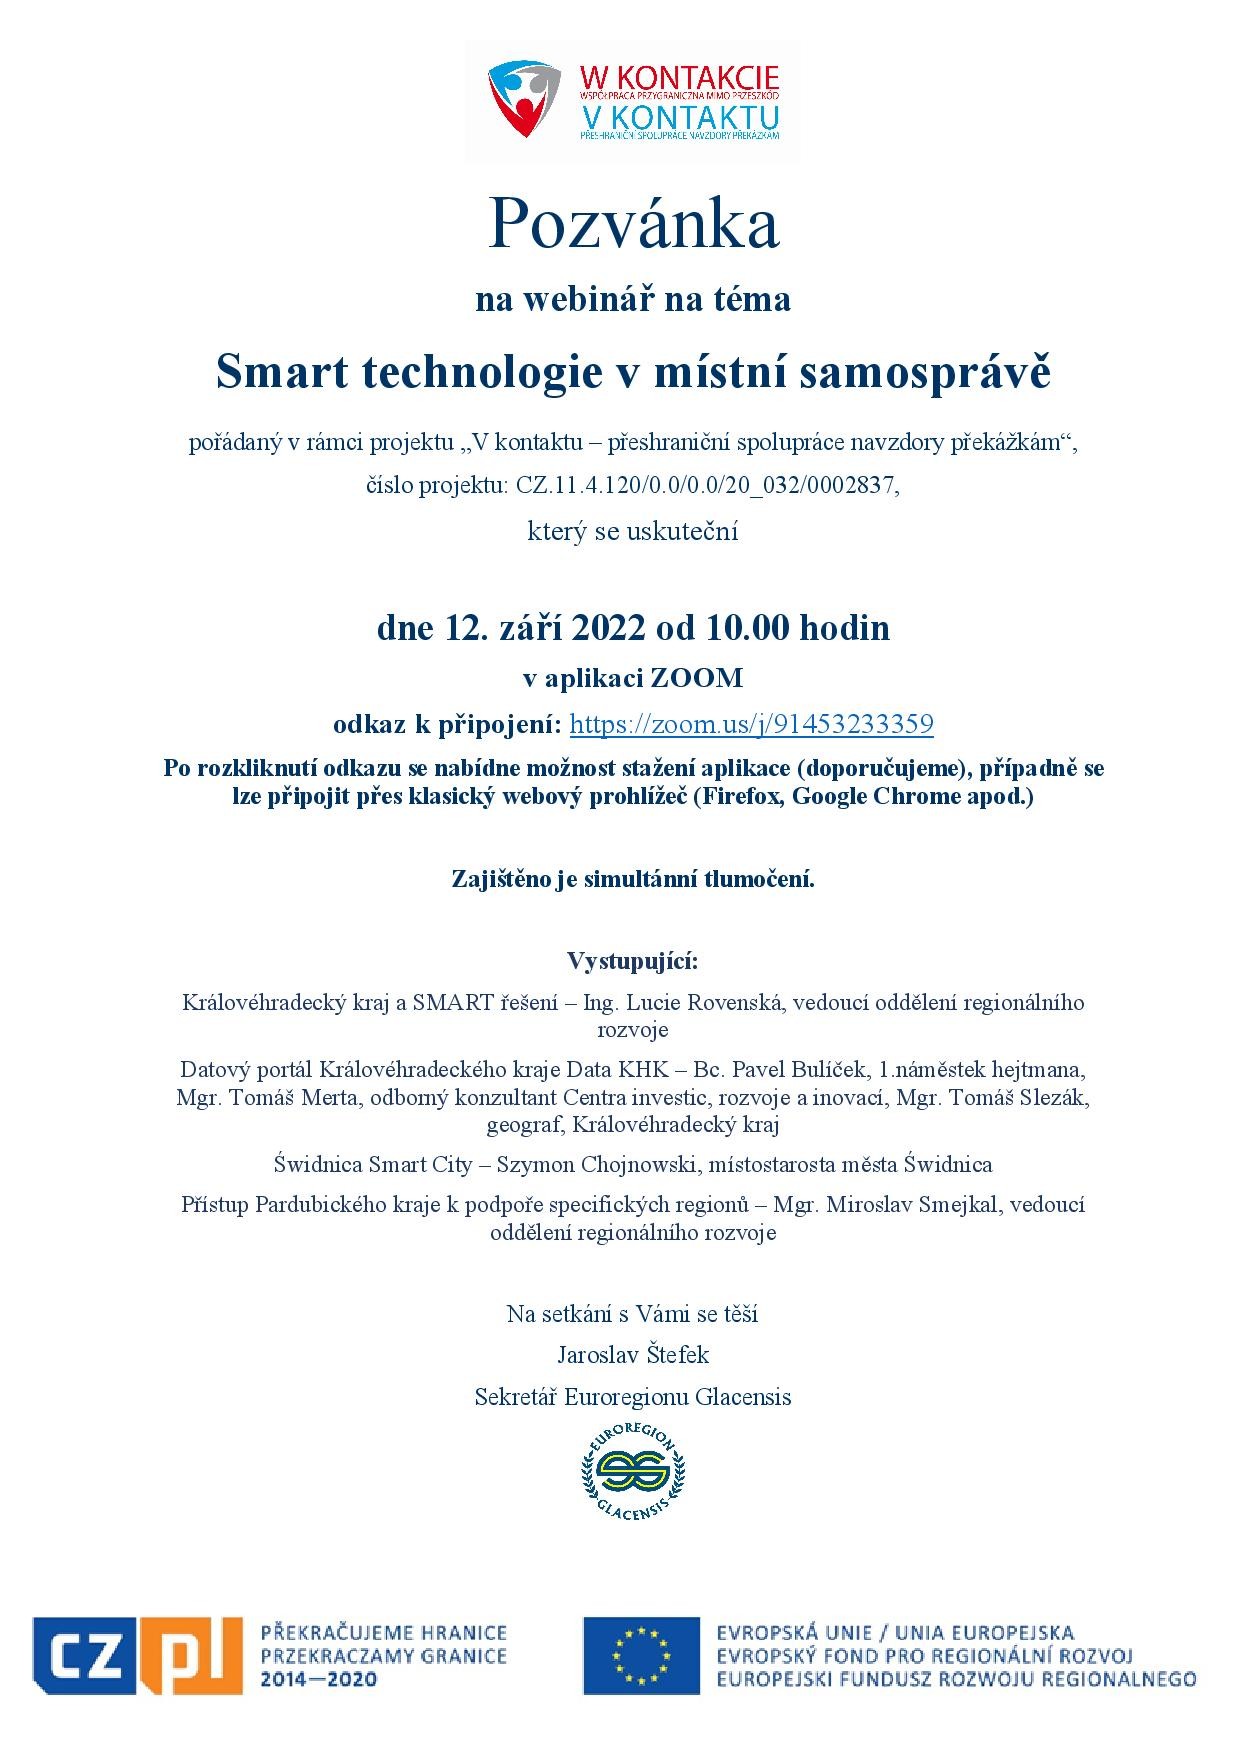 Pozvnka_Smart technologie_12.9.2022_CZ